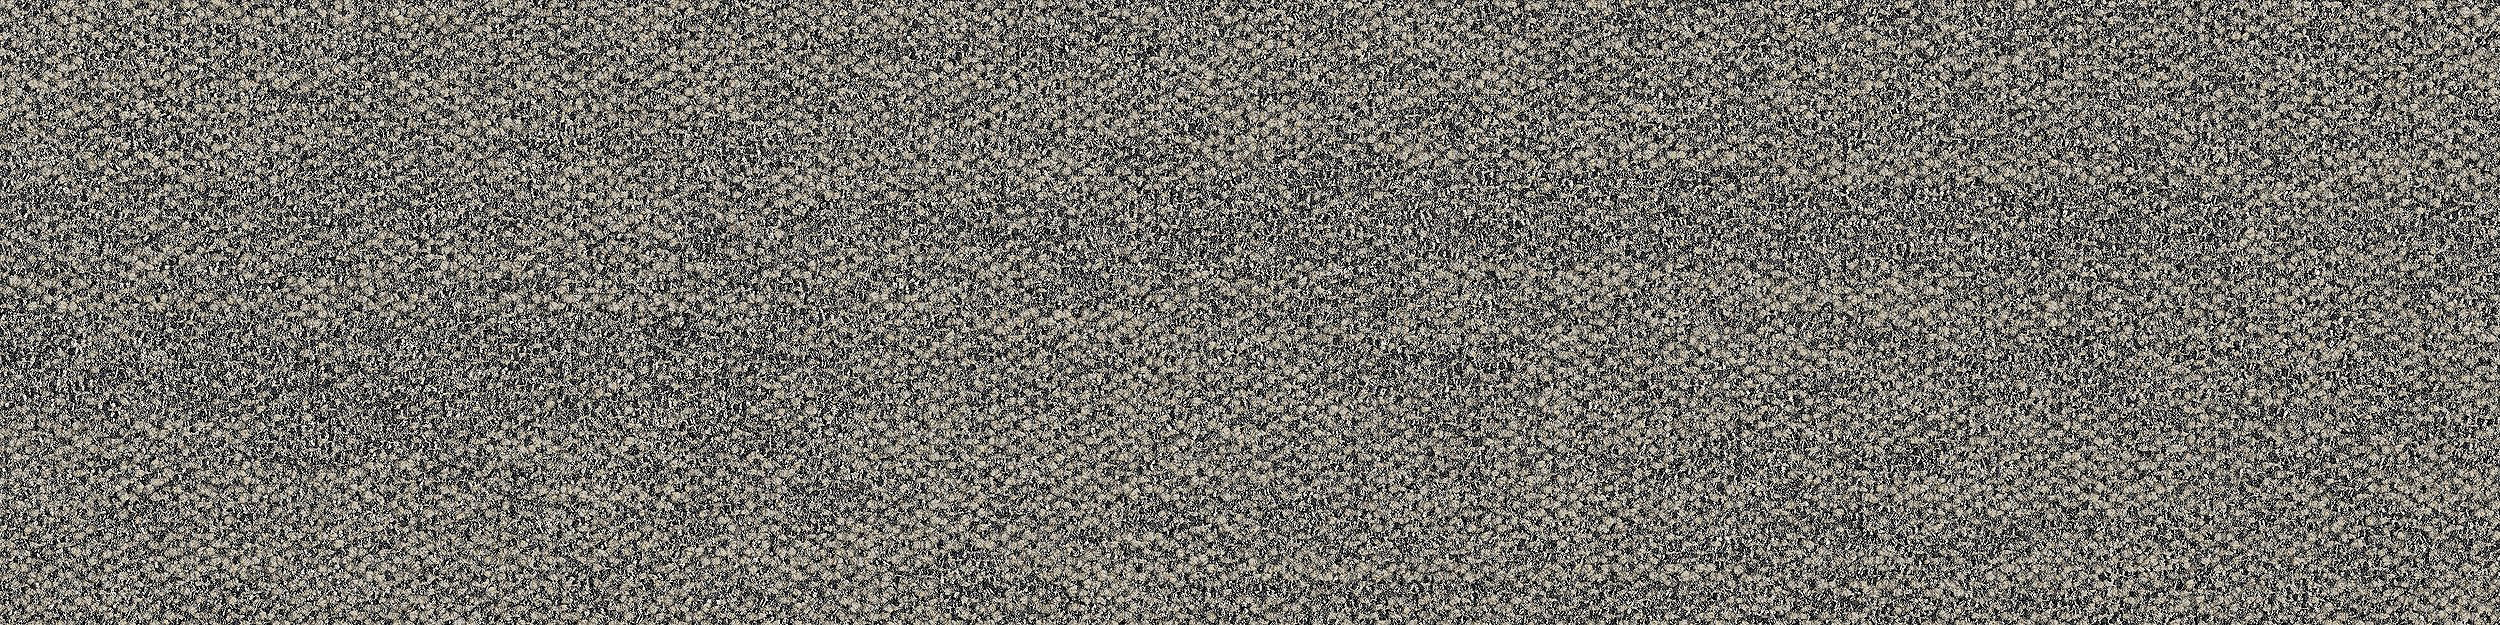 Open Air 402 Carpet Tile In Natural image number 6